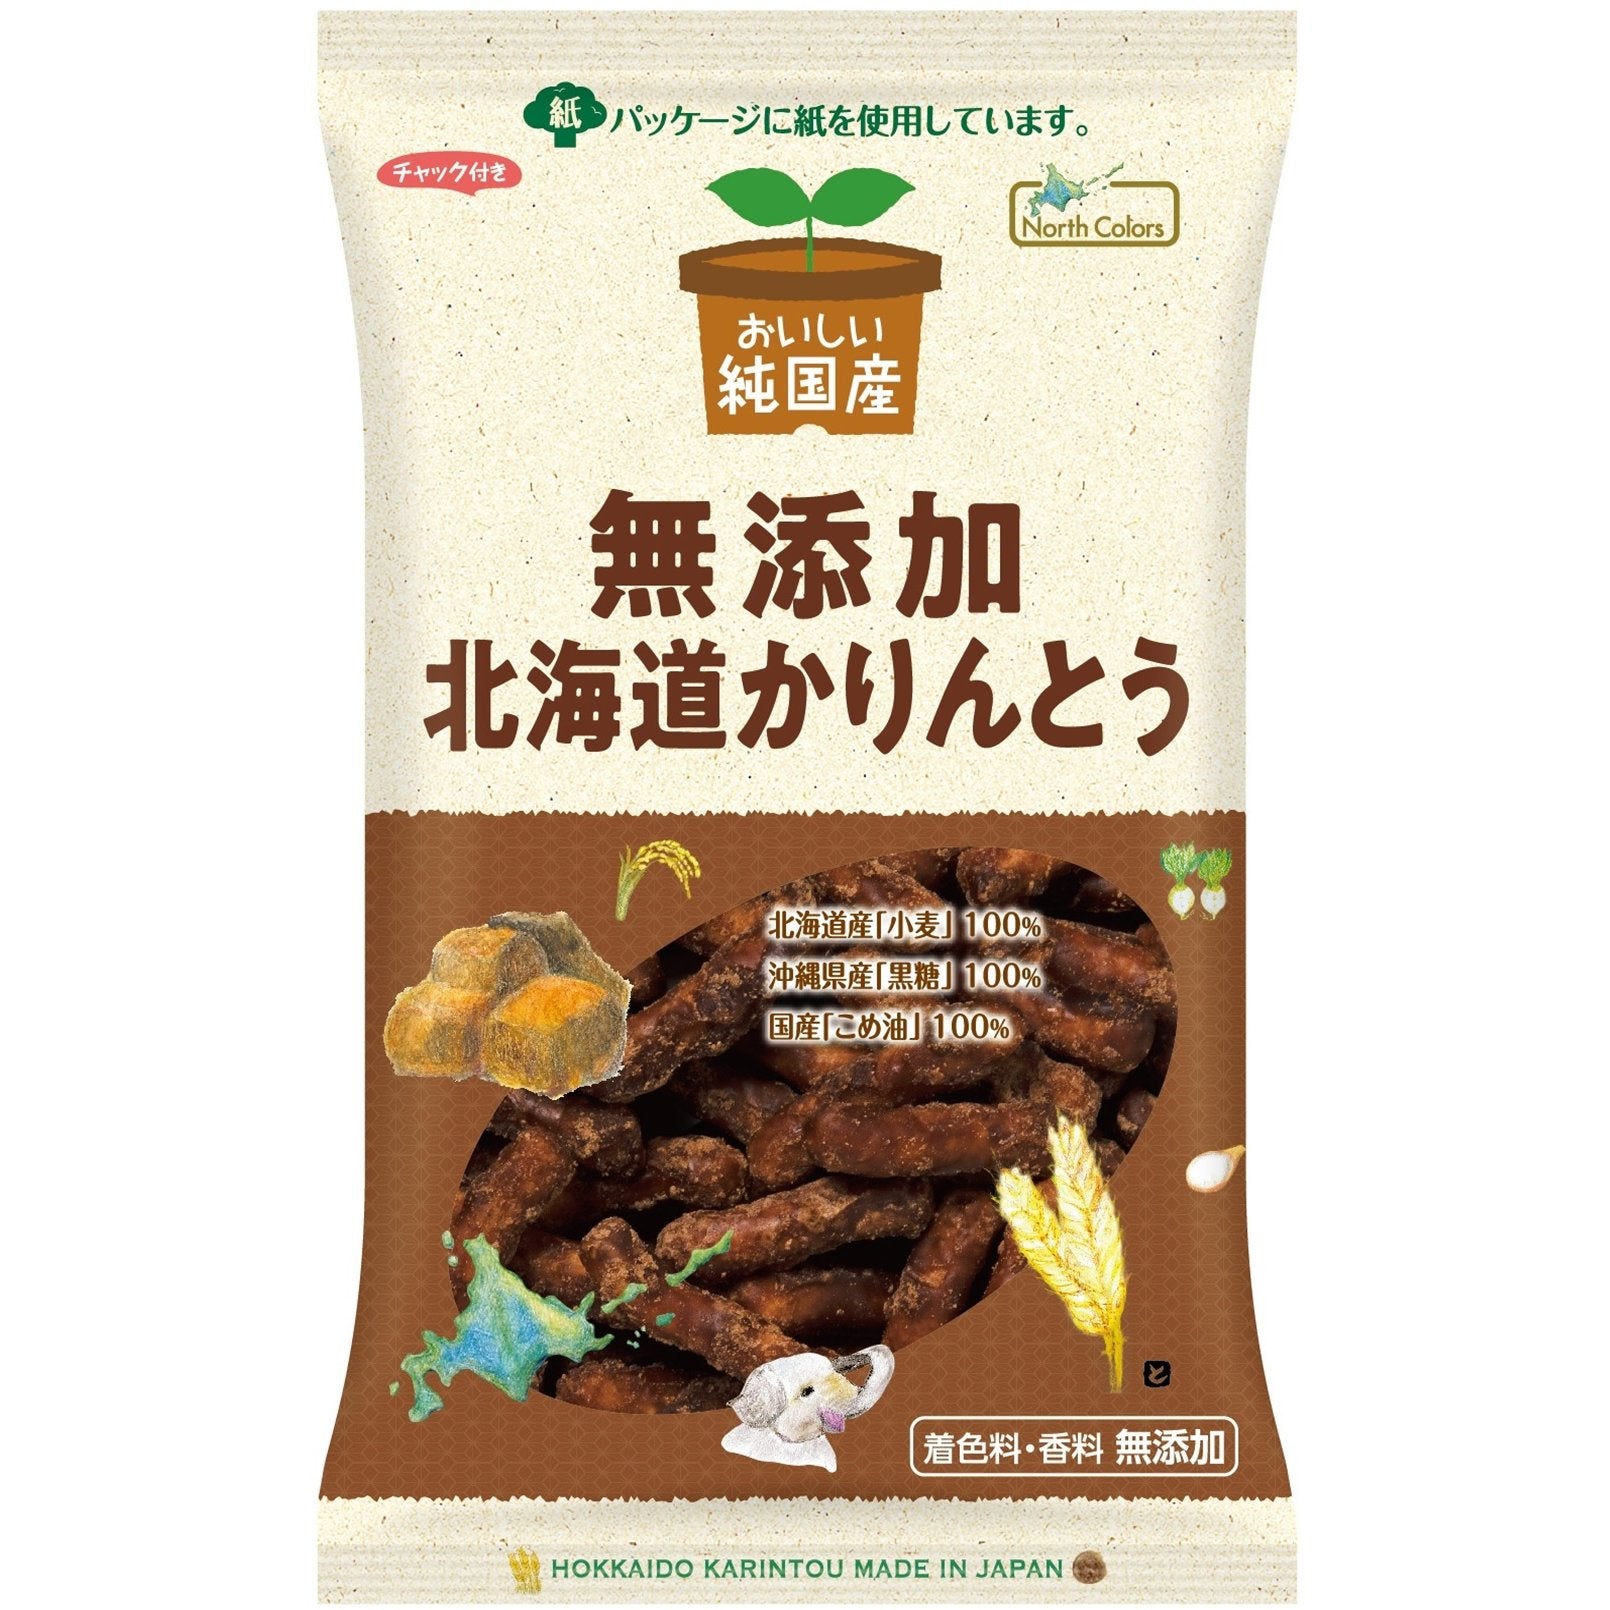 North Colors Additive-Free Karinto Japanese Brown Sugar Snack 100g